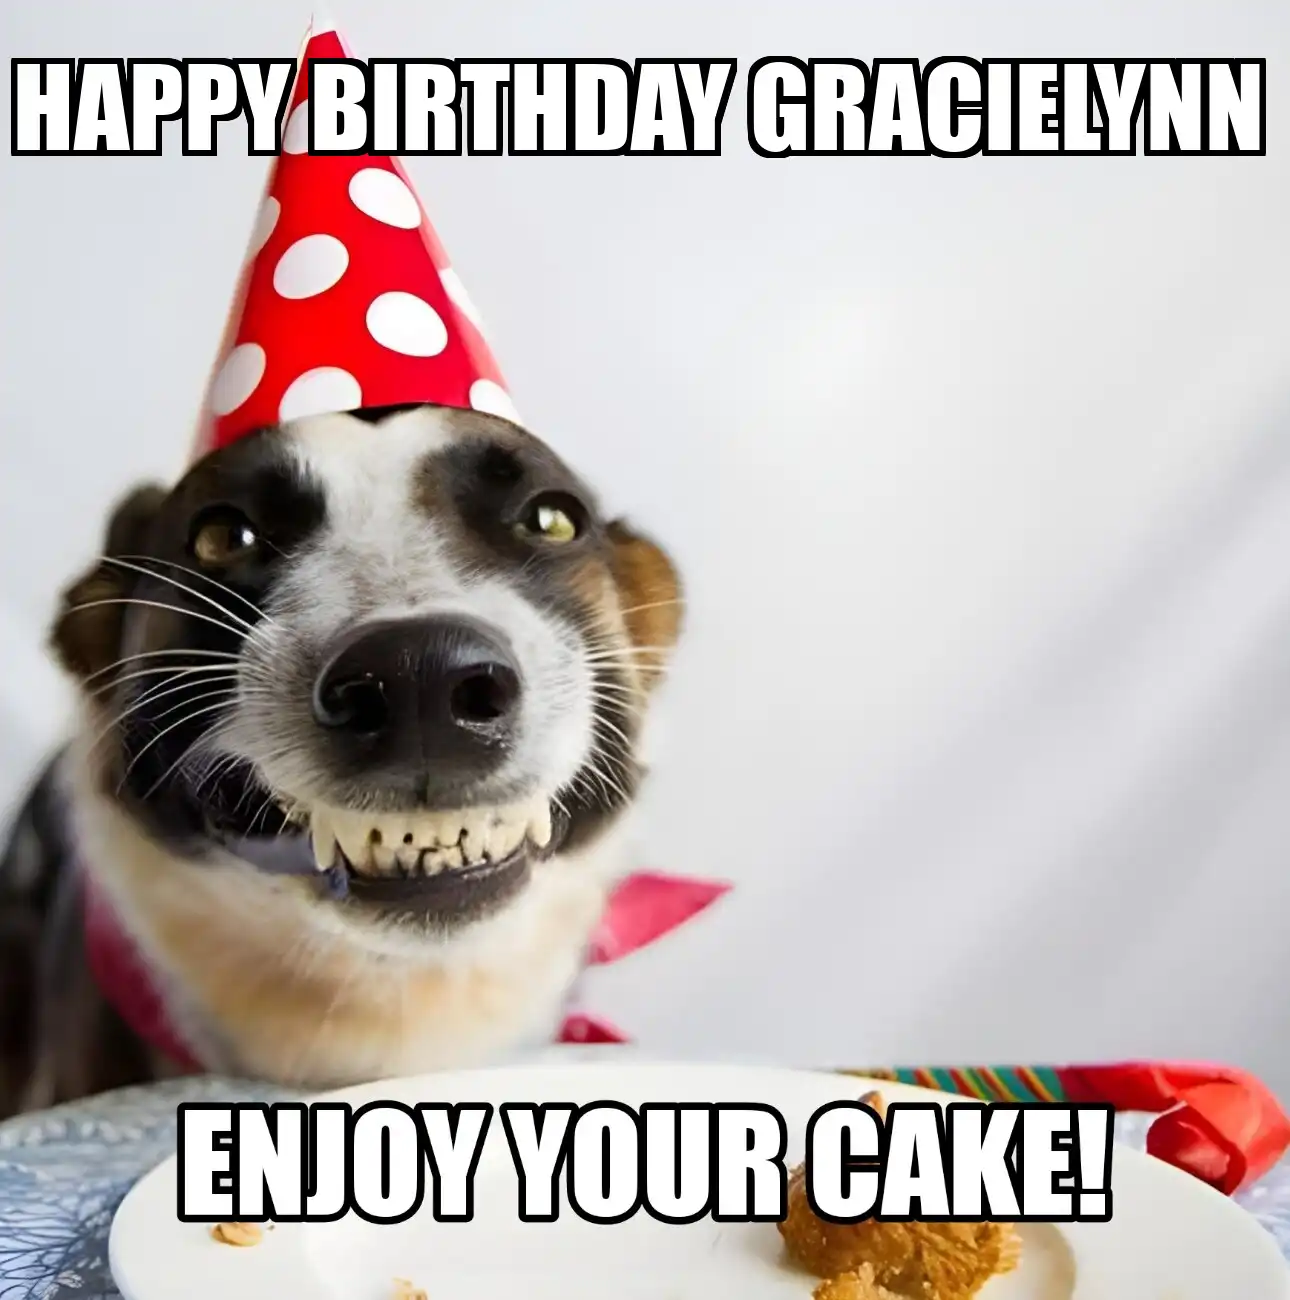 Happy Birthday Gracielynn Enjoy Your Cake Dog Meme